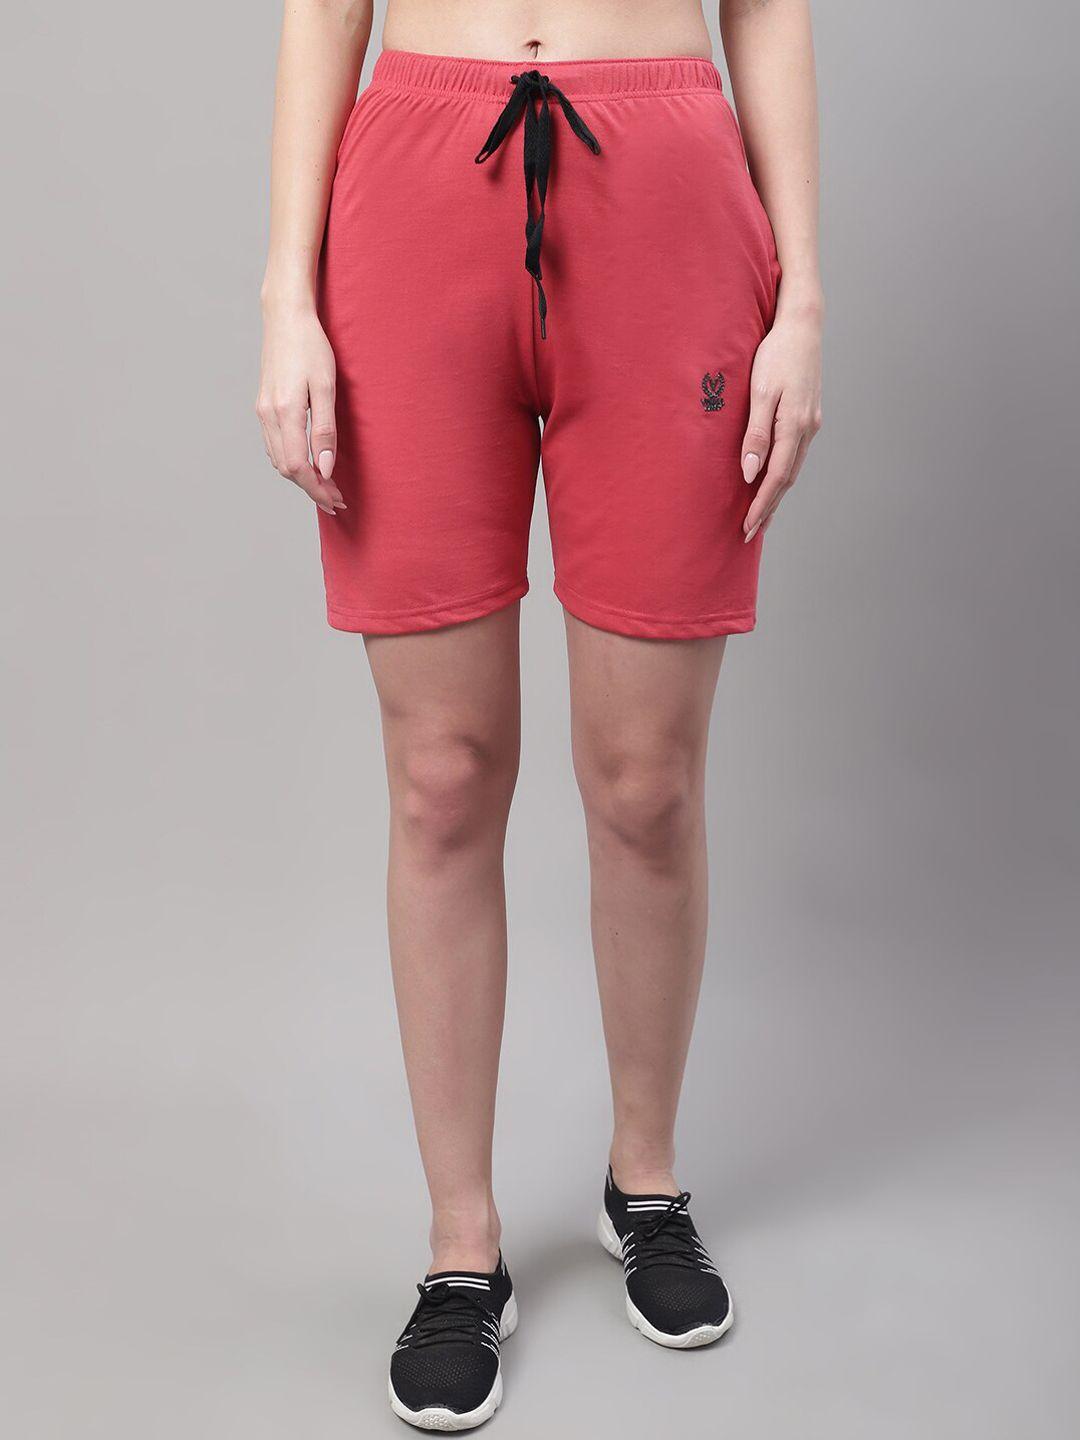 vimal jonney women mid-rise above knee length cotton sports shorts